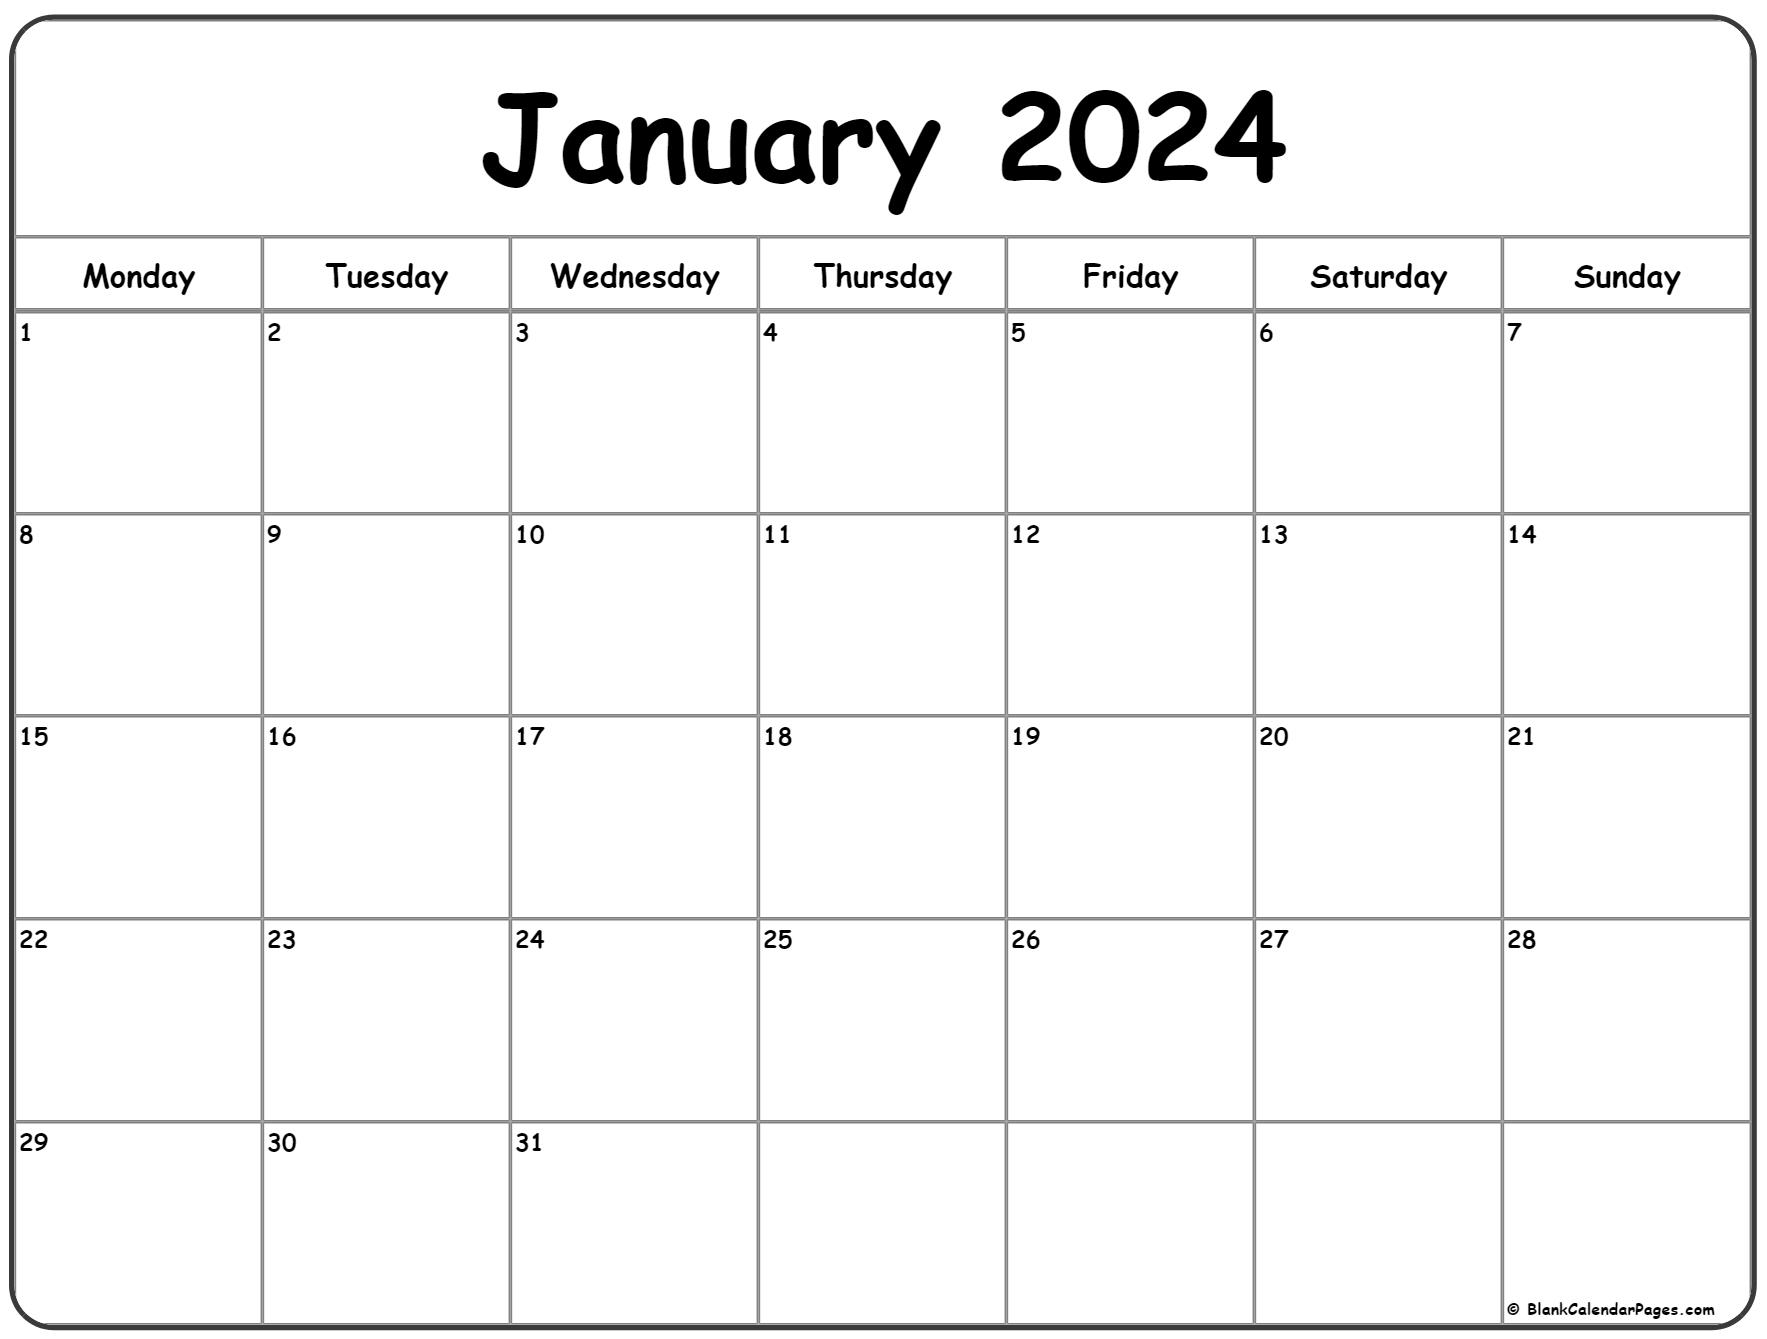 January 2024 Monday Calendar | Monday To Sunday for Blank Calendar Printable January 2024